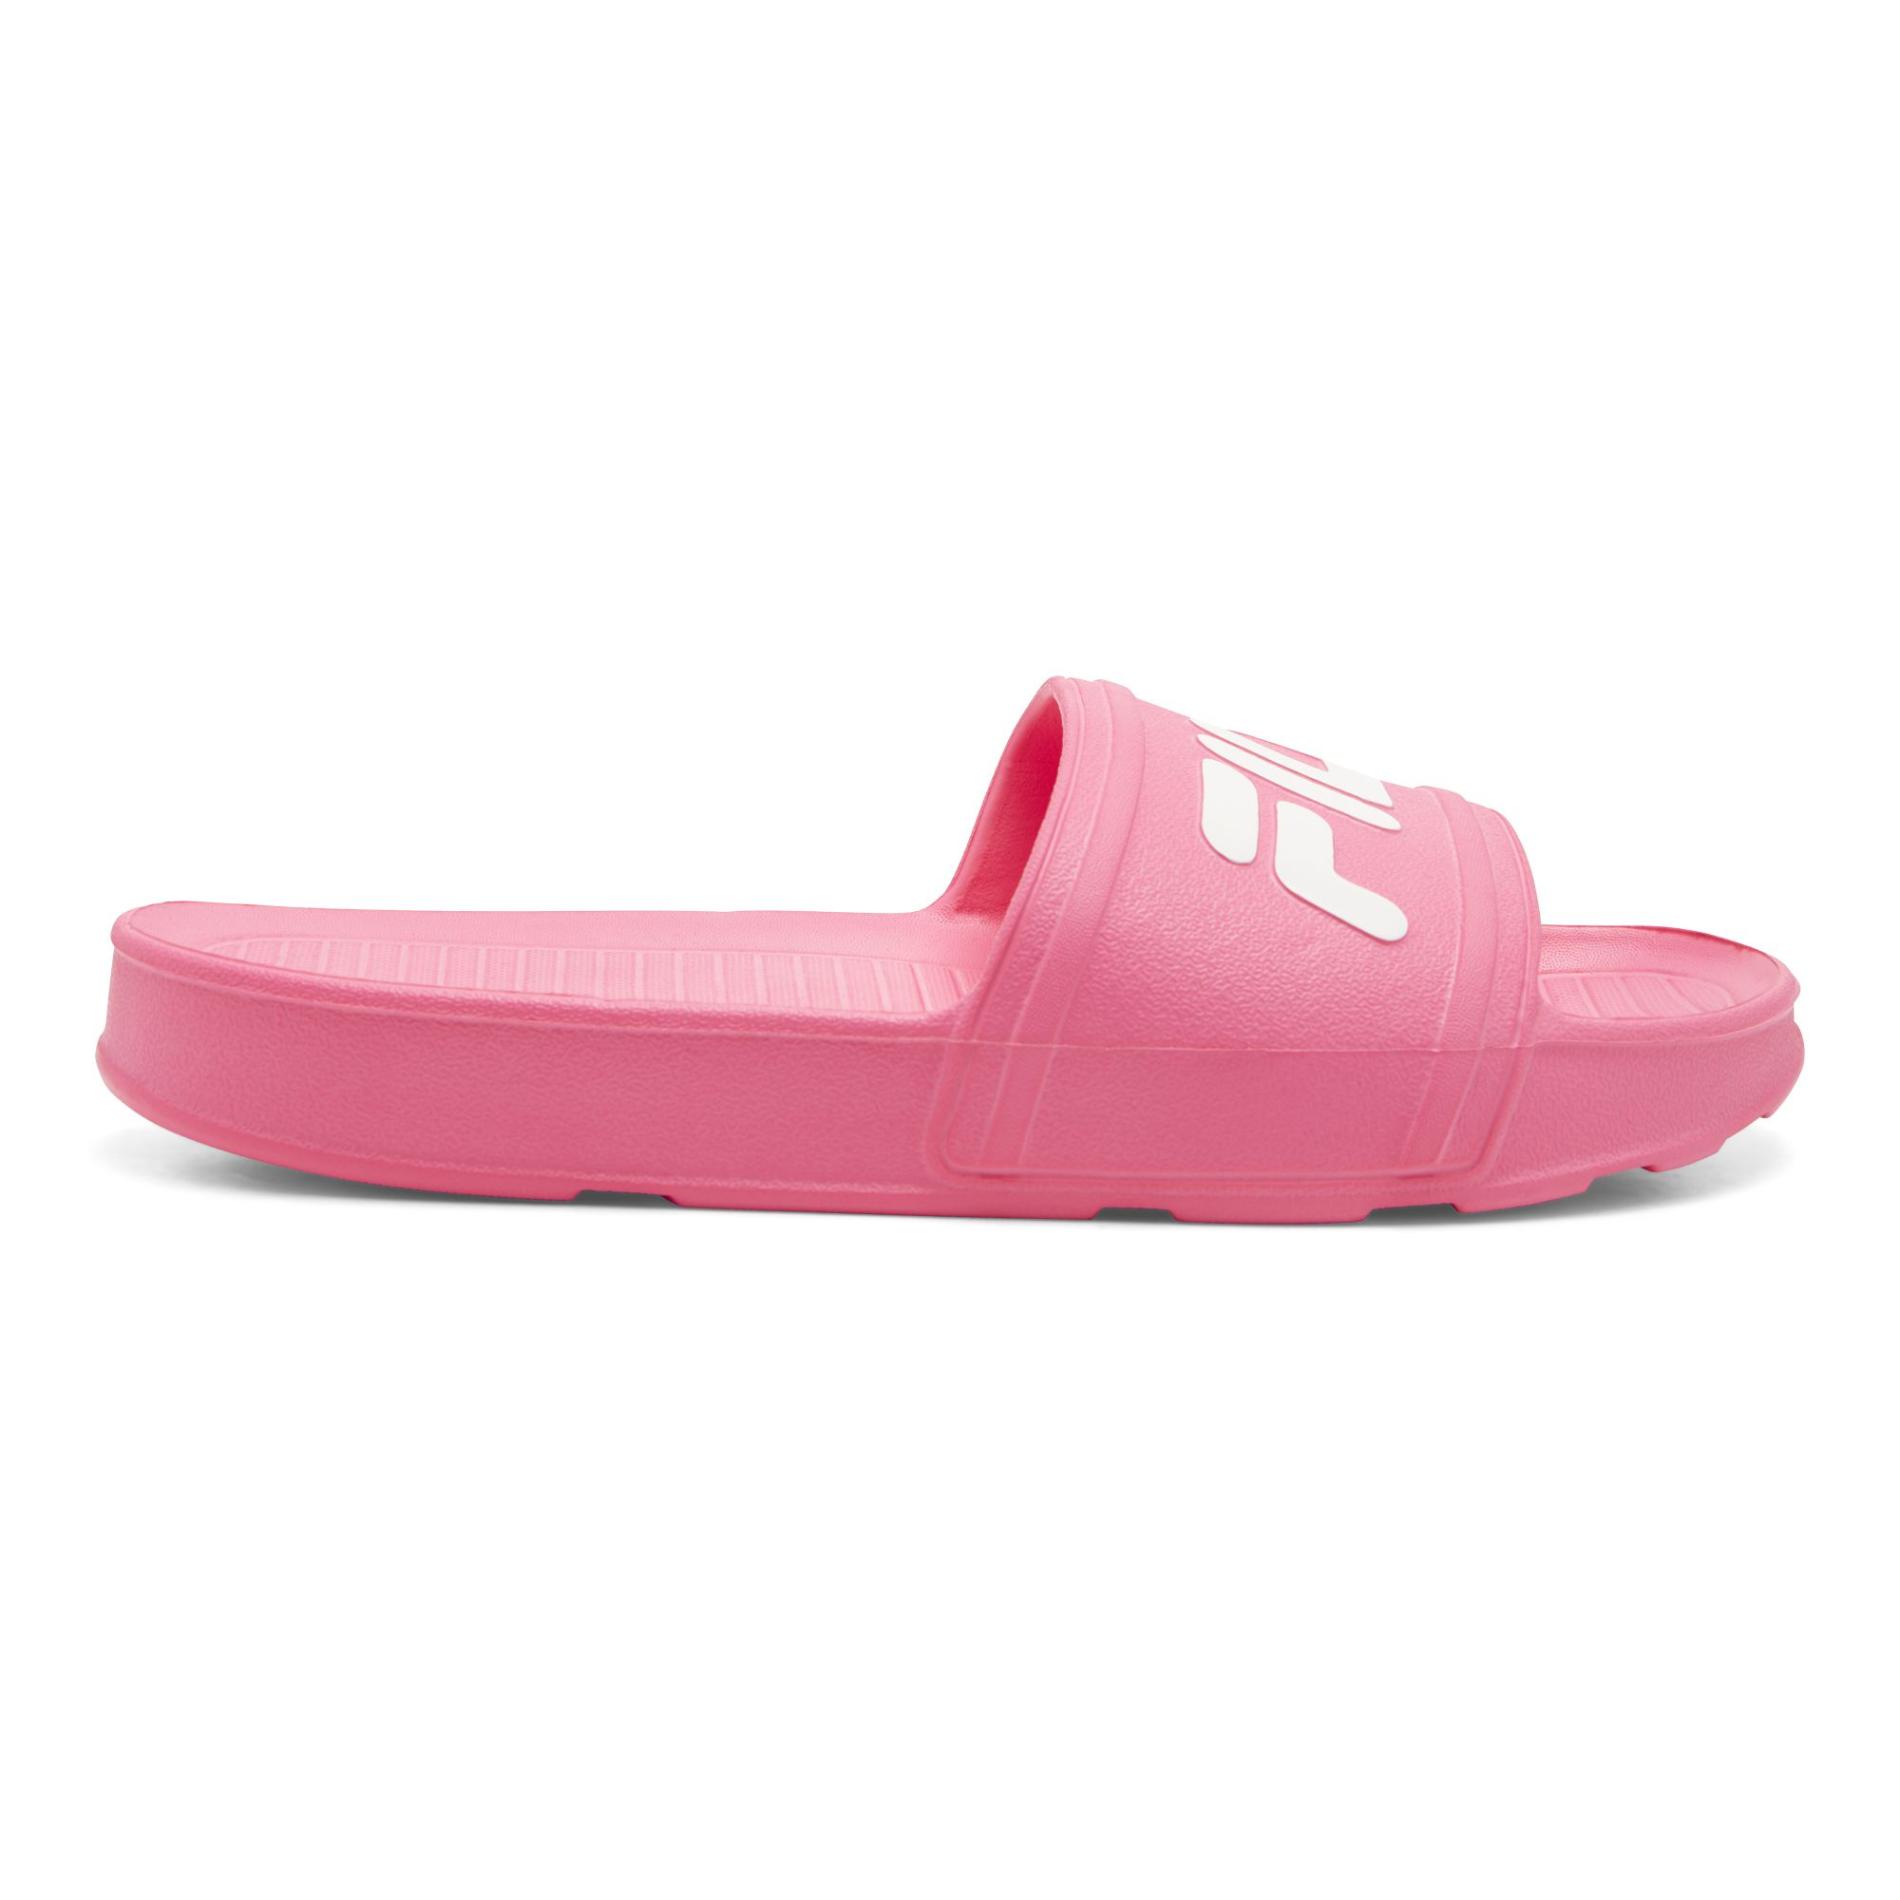 Fila Women's Sleek Pink Athletic Slide Sandal